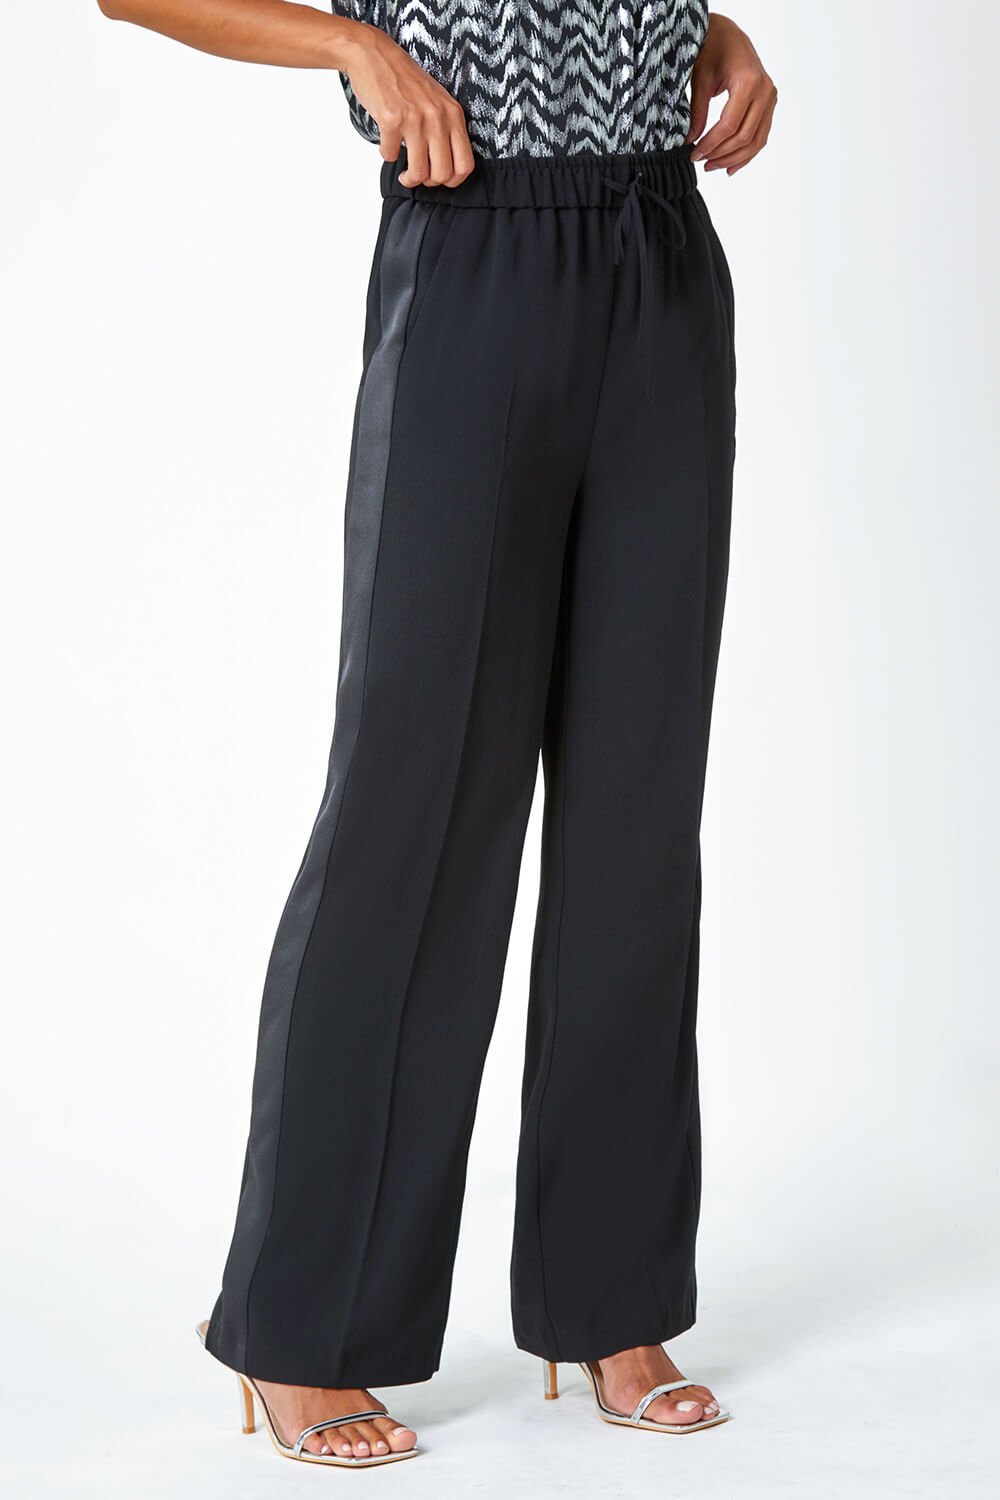 Black Satin Stripe Stretch Wide Leg Trousers, Image 4 of 5